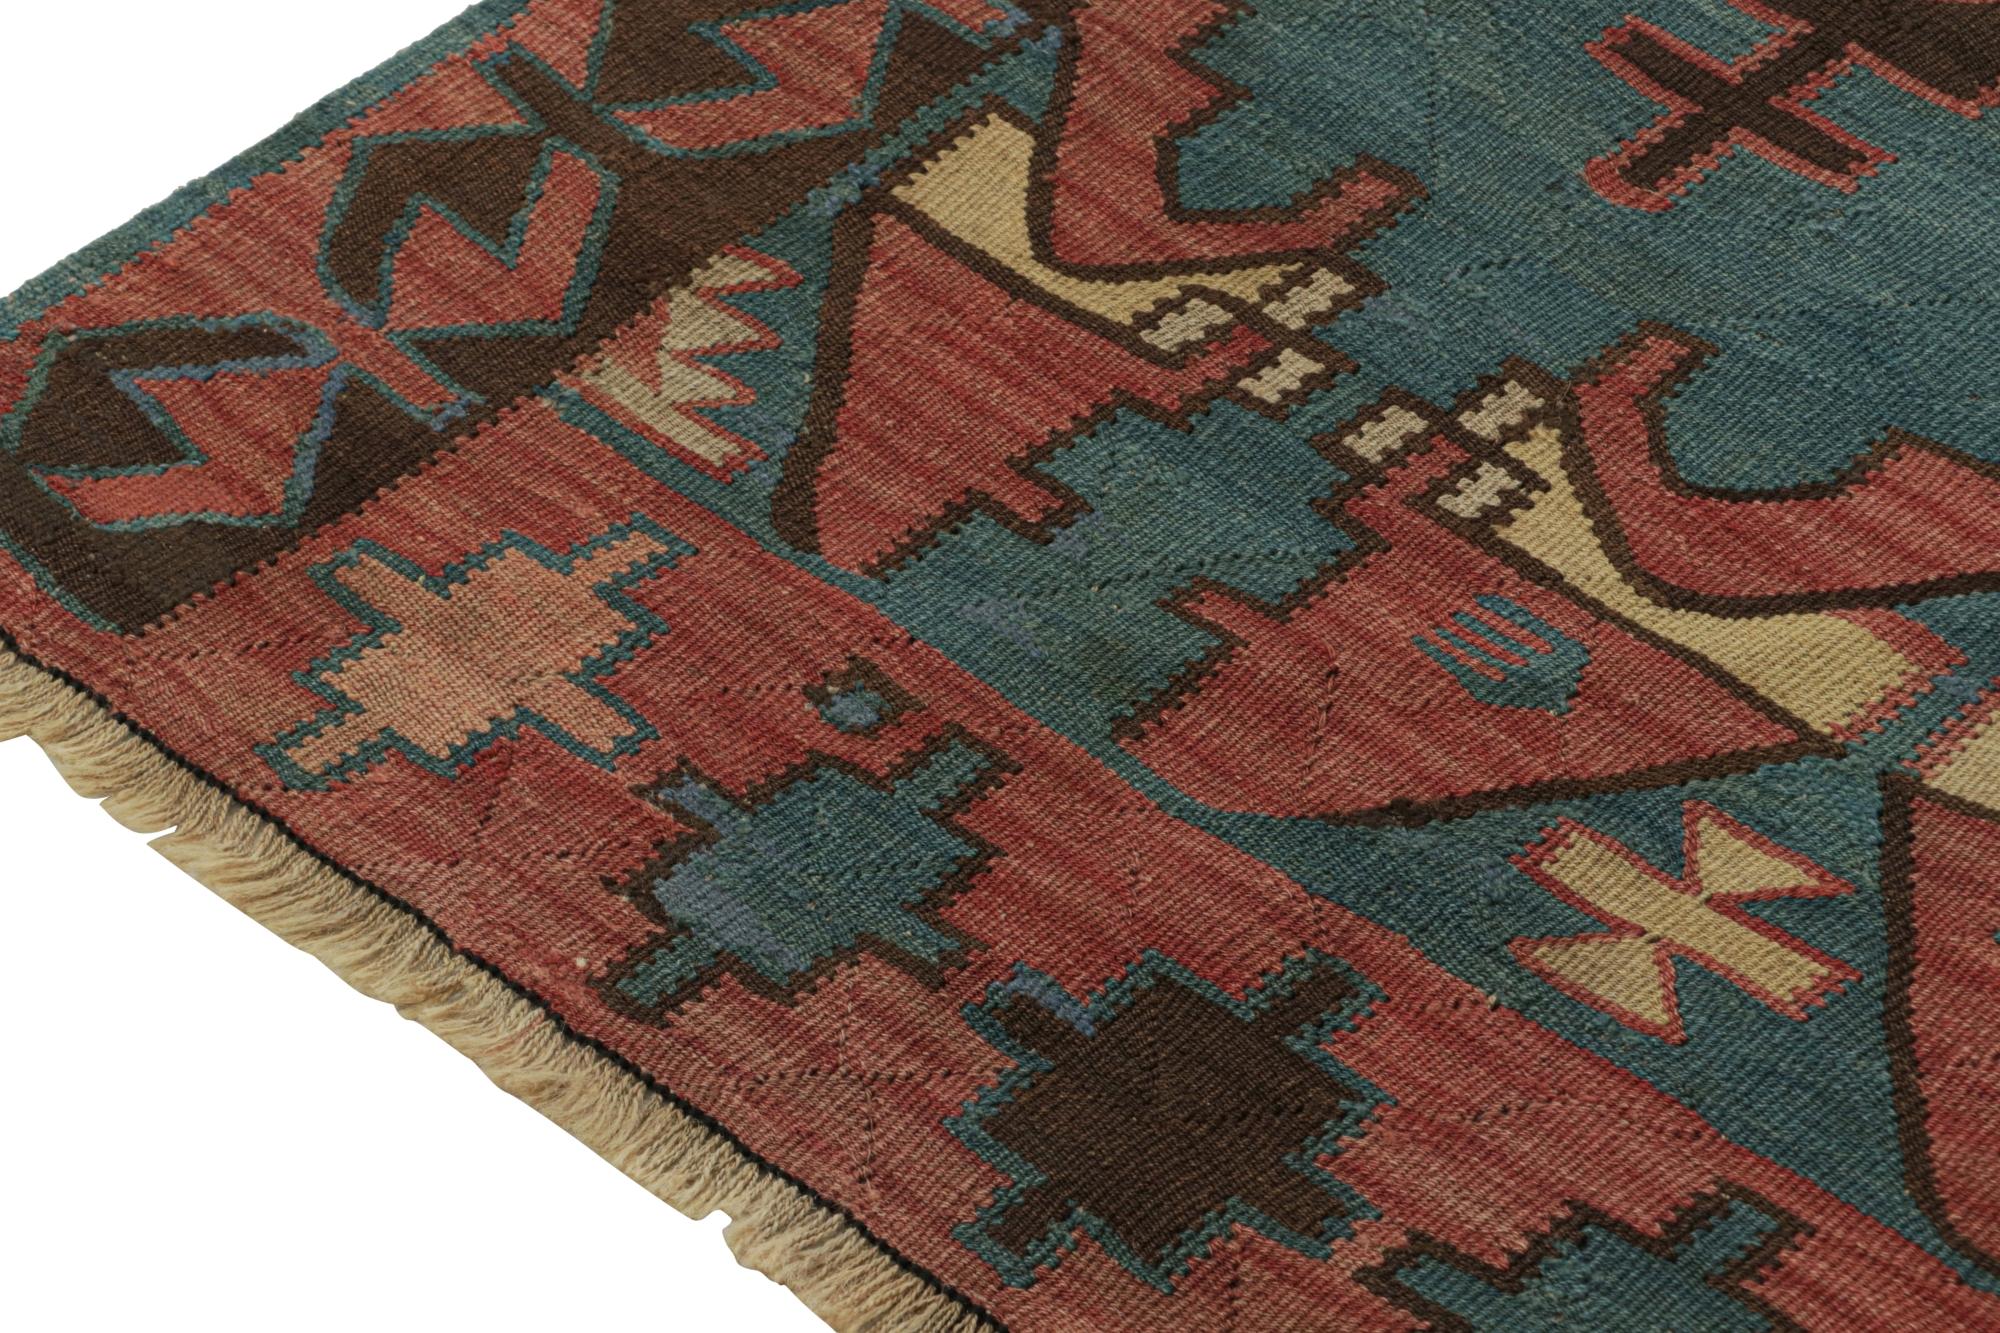 Wool Vintage Persian Kilim in Blue & Red Tribal Patterns